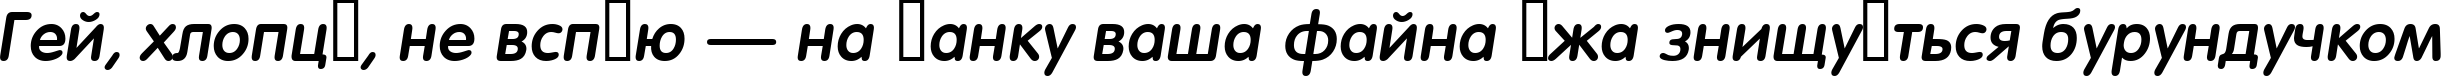 Пример написания шрифтом a_FuturaRoundDemi Italic текста на украинском